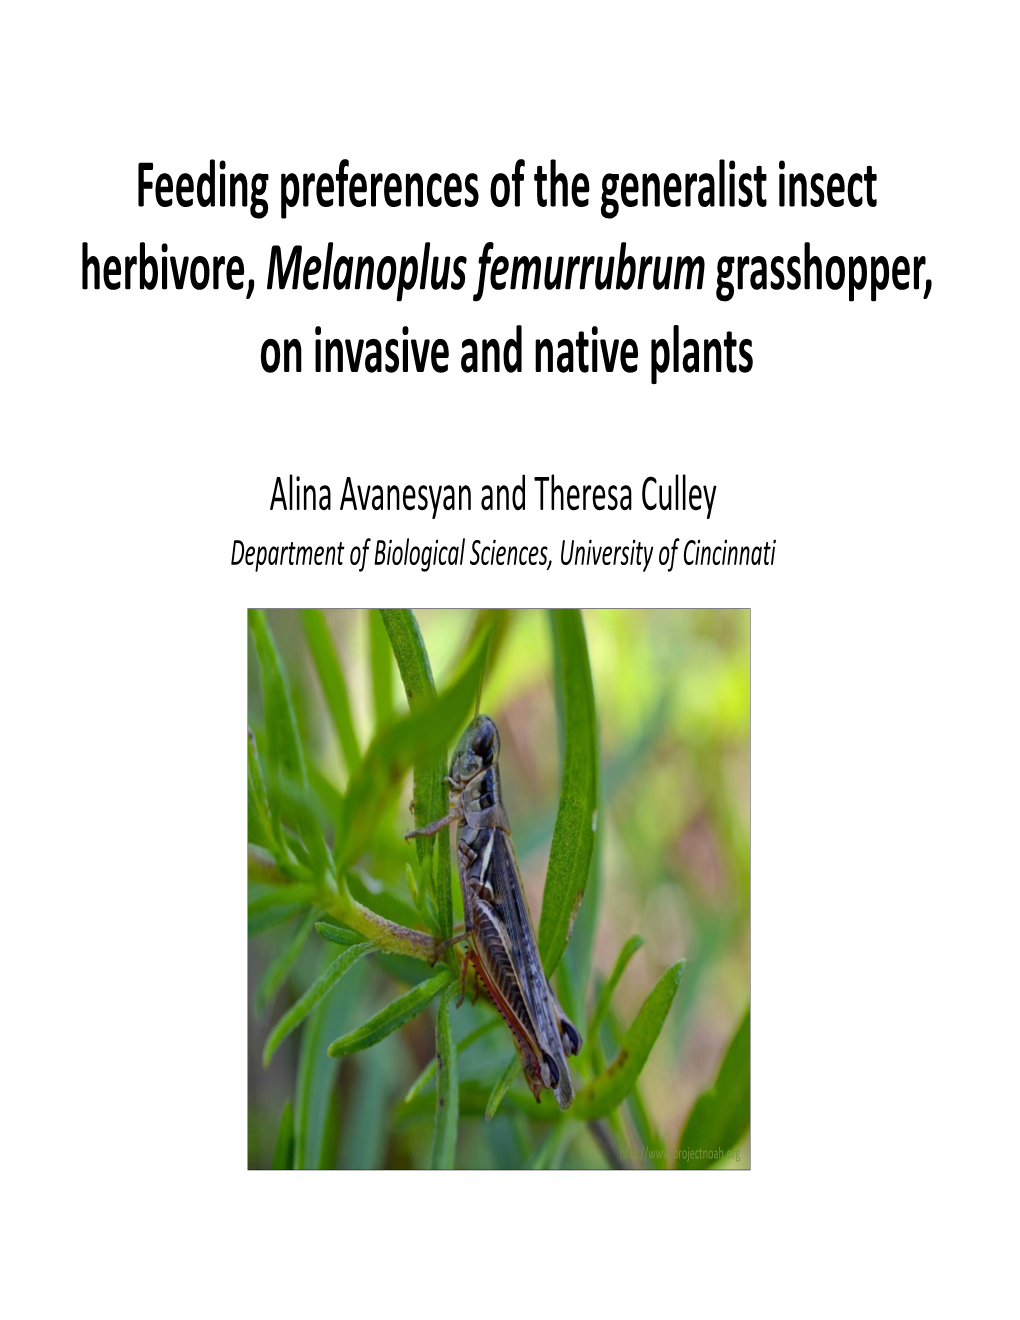 Feeding Preferences of the Generalist Insect Herbivore, Melanoplus Femurrubrum Grasshopper, on Invasive and Native Plants